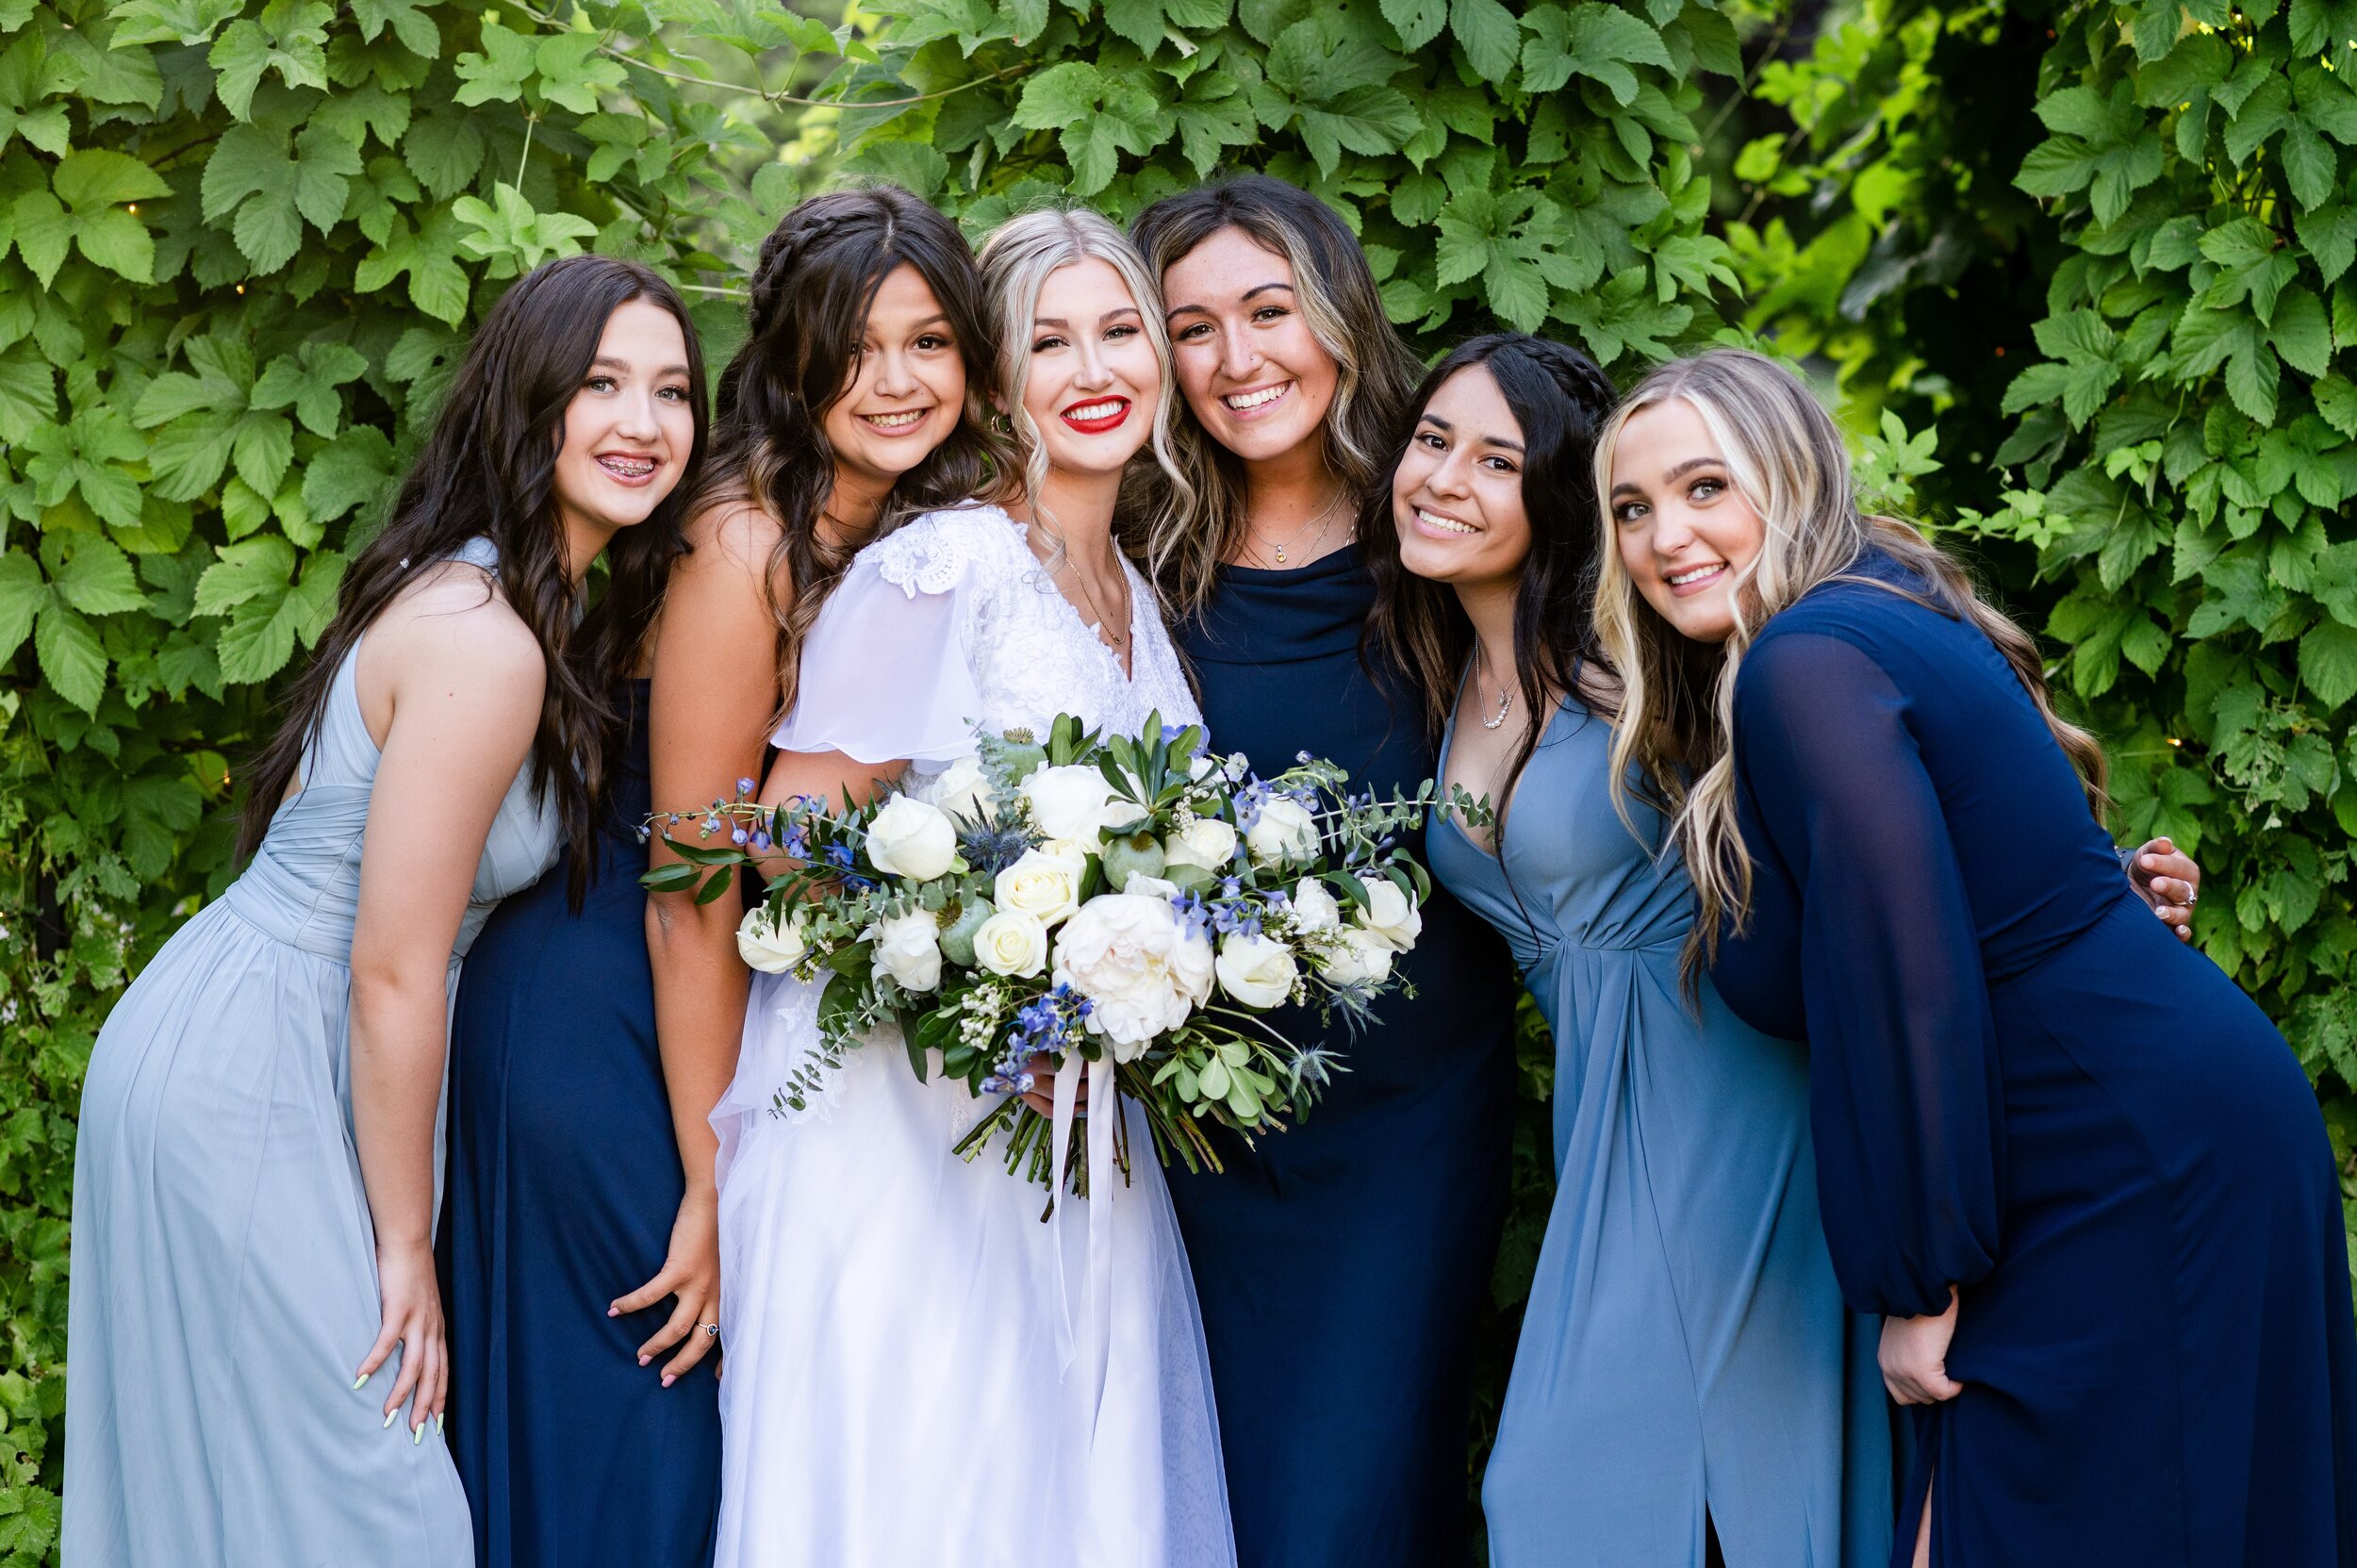 Blue Bridesmaids Dresses - Tri Cities Pasco Washington Promise Gardens Wedding Photographer - Harper Road Floral - Wedding Decor Centerpiece Inspo